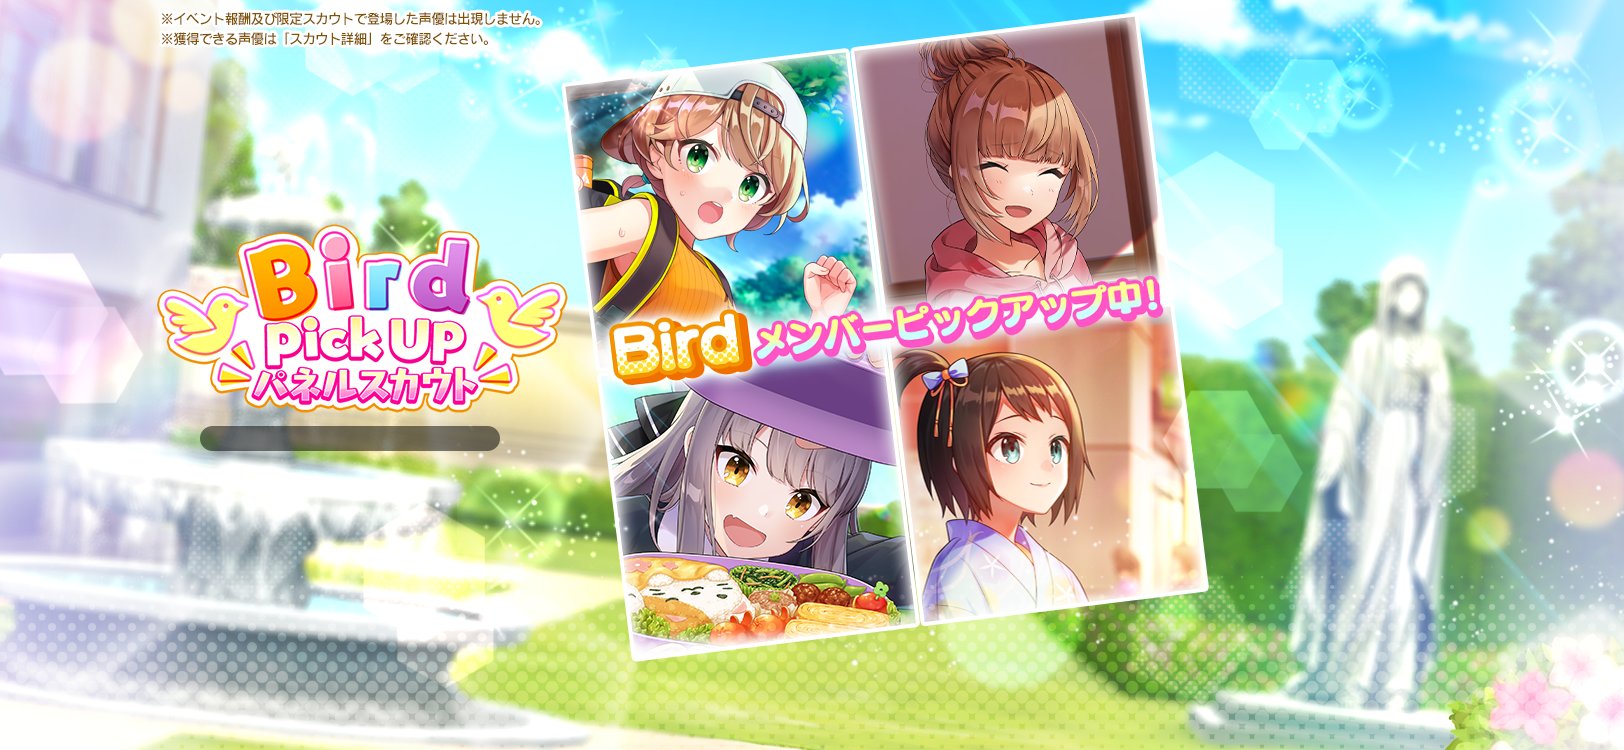 Bird PickUp 패널 스카우트 20201013.jpeg